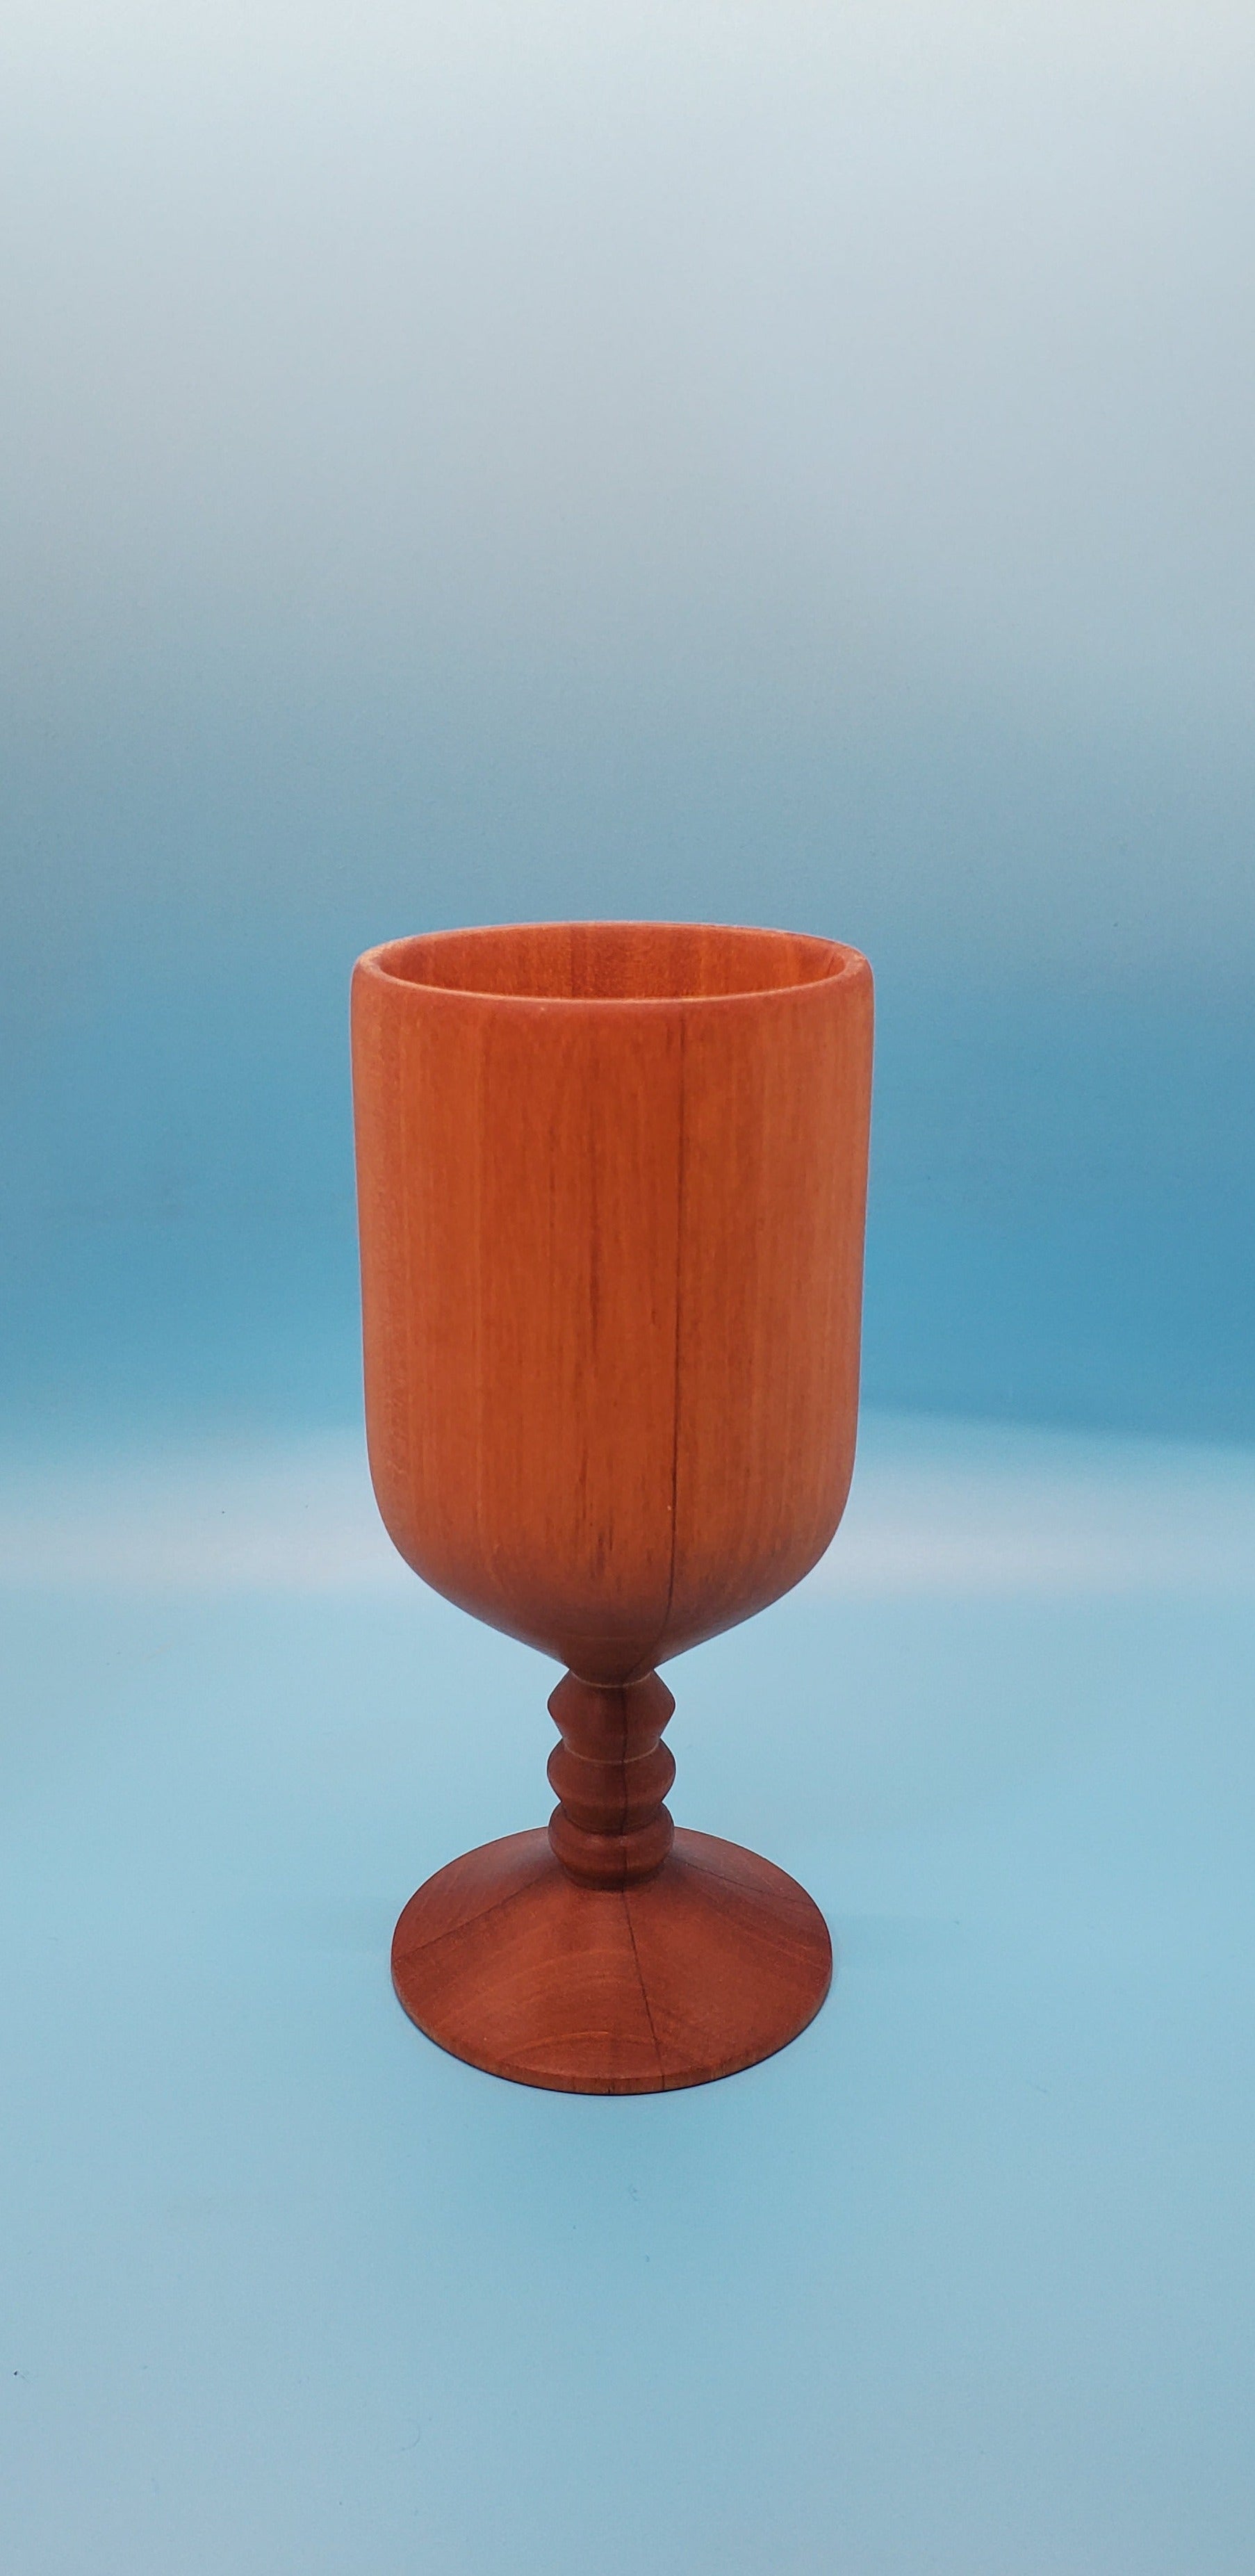 Analcho cups Woodlid for solo アナルコカップ - バーベキュー・調理用品